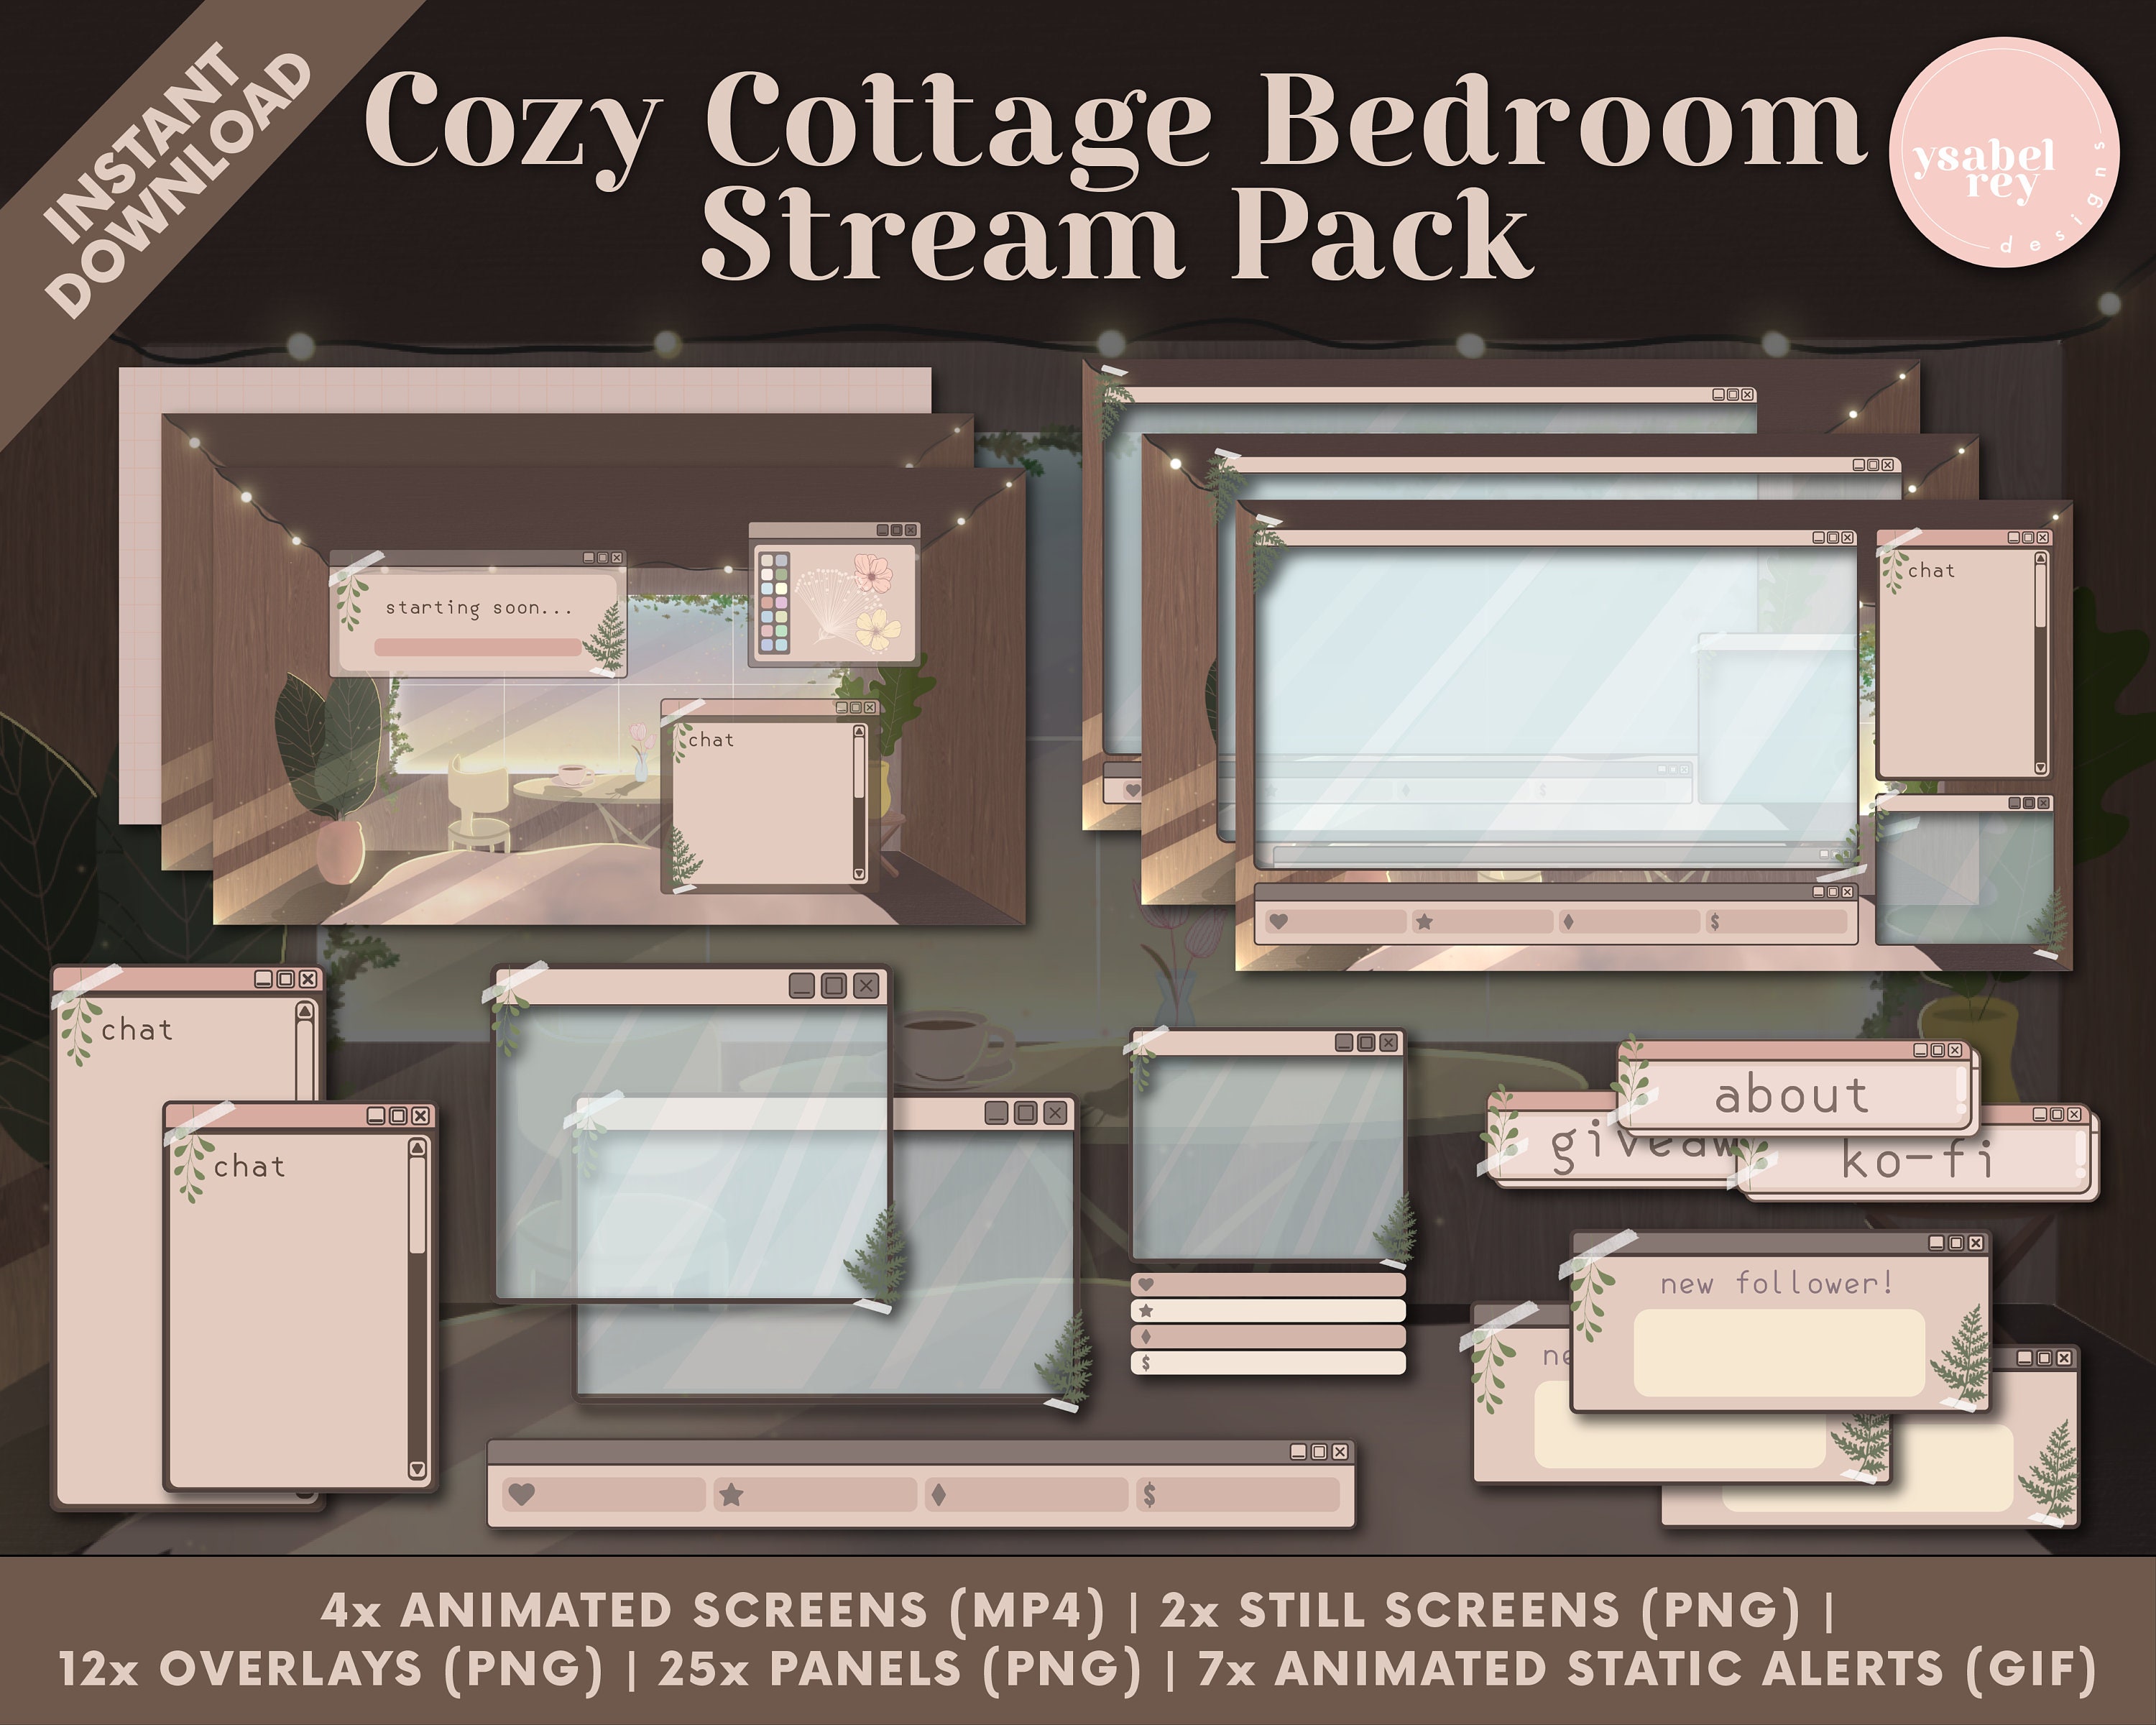 Cozy Night Stream Package – StreamSpell